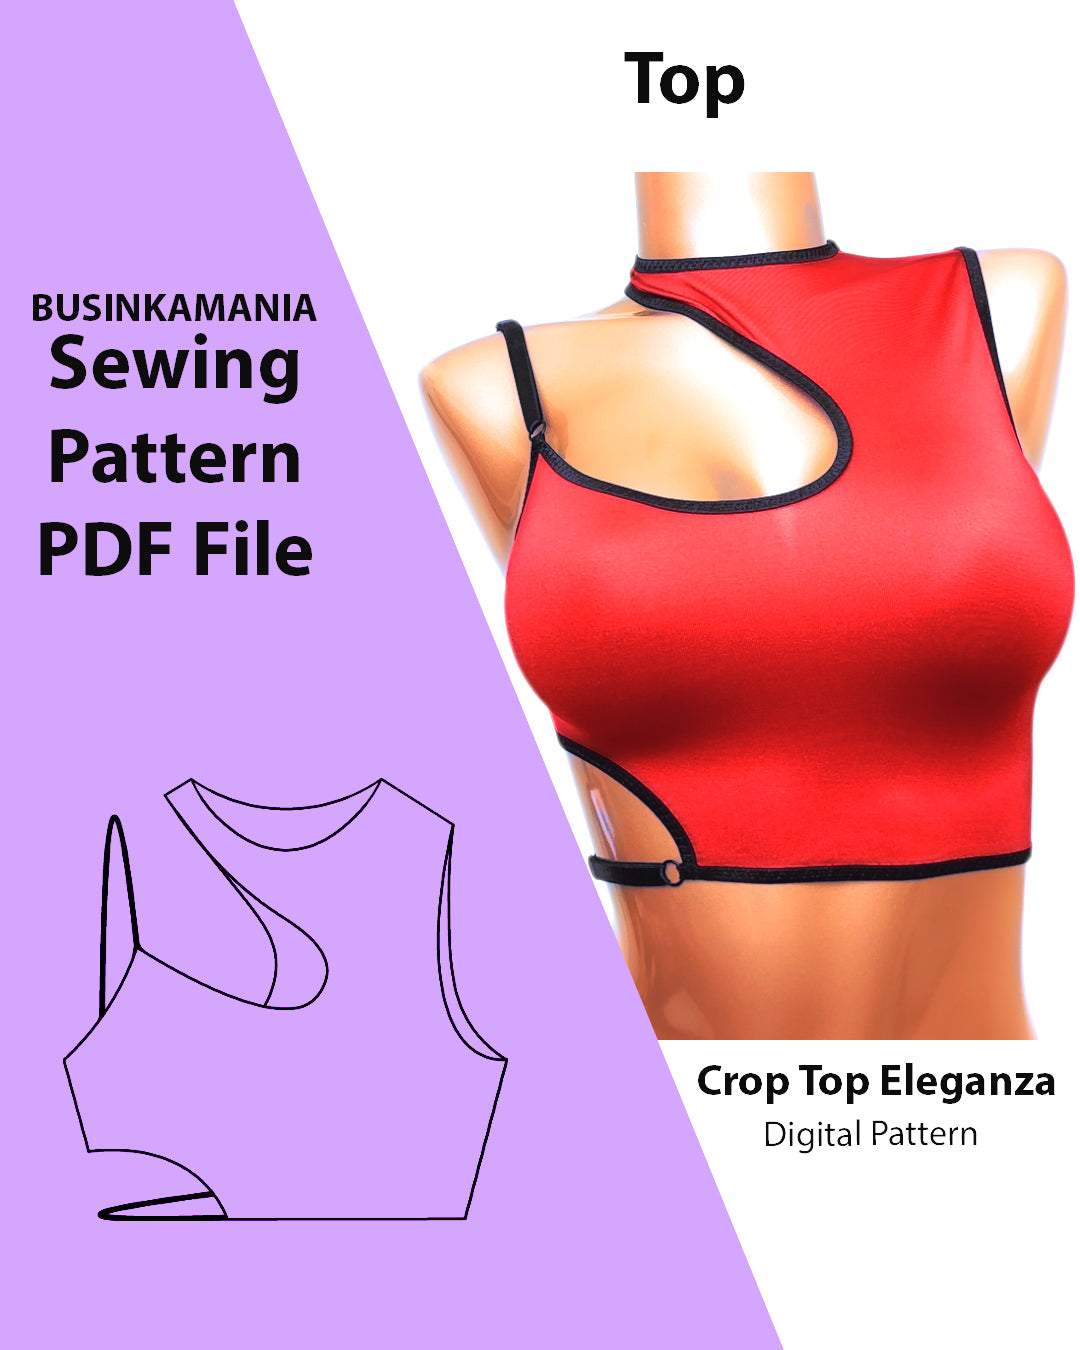 Top Eleganza Sewing Pattern – BusinkaMania